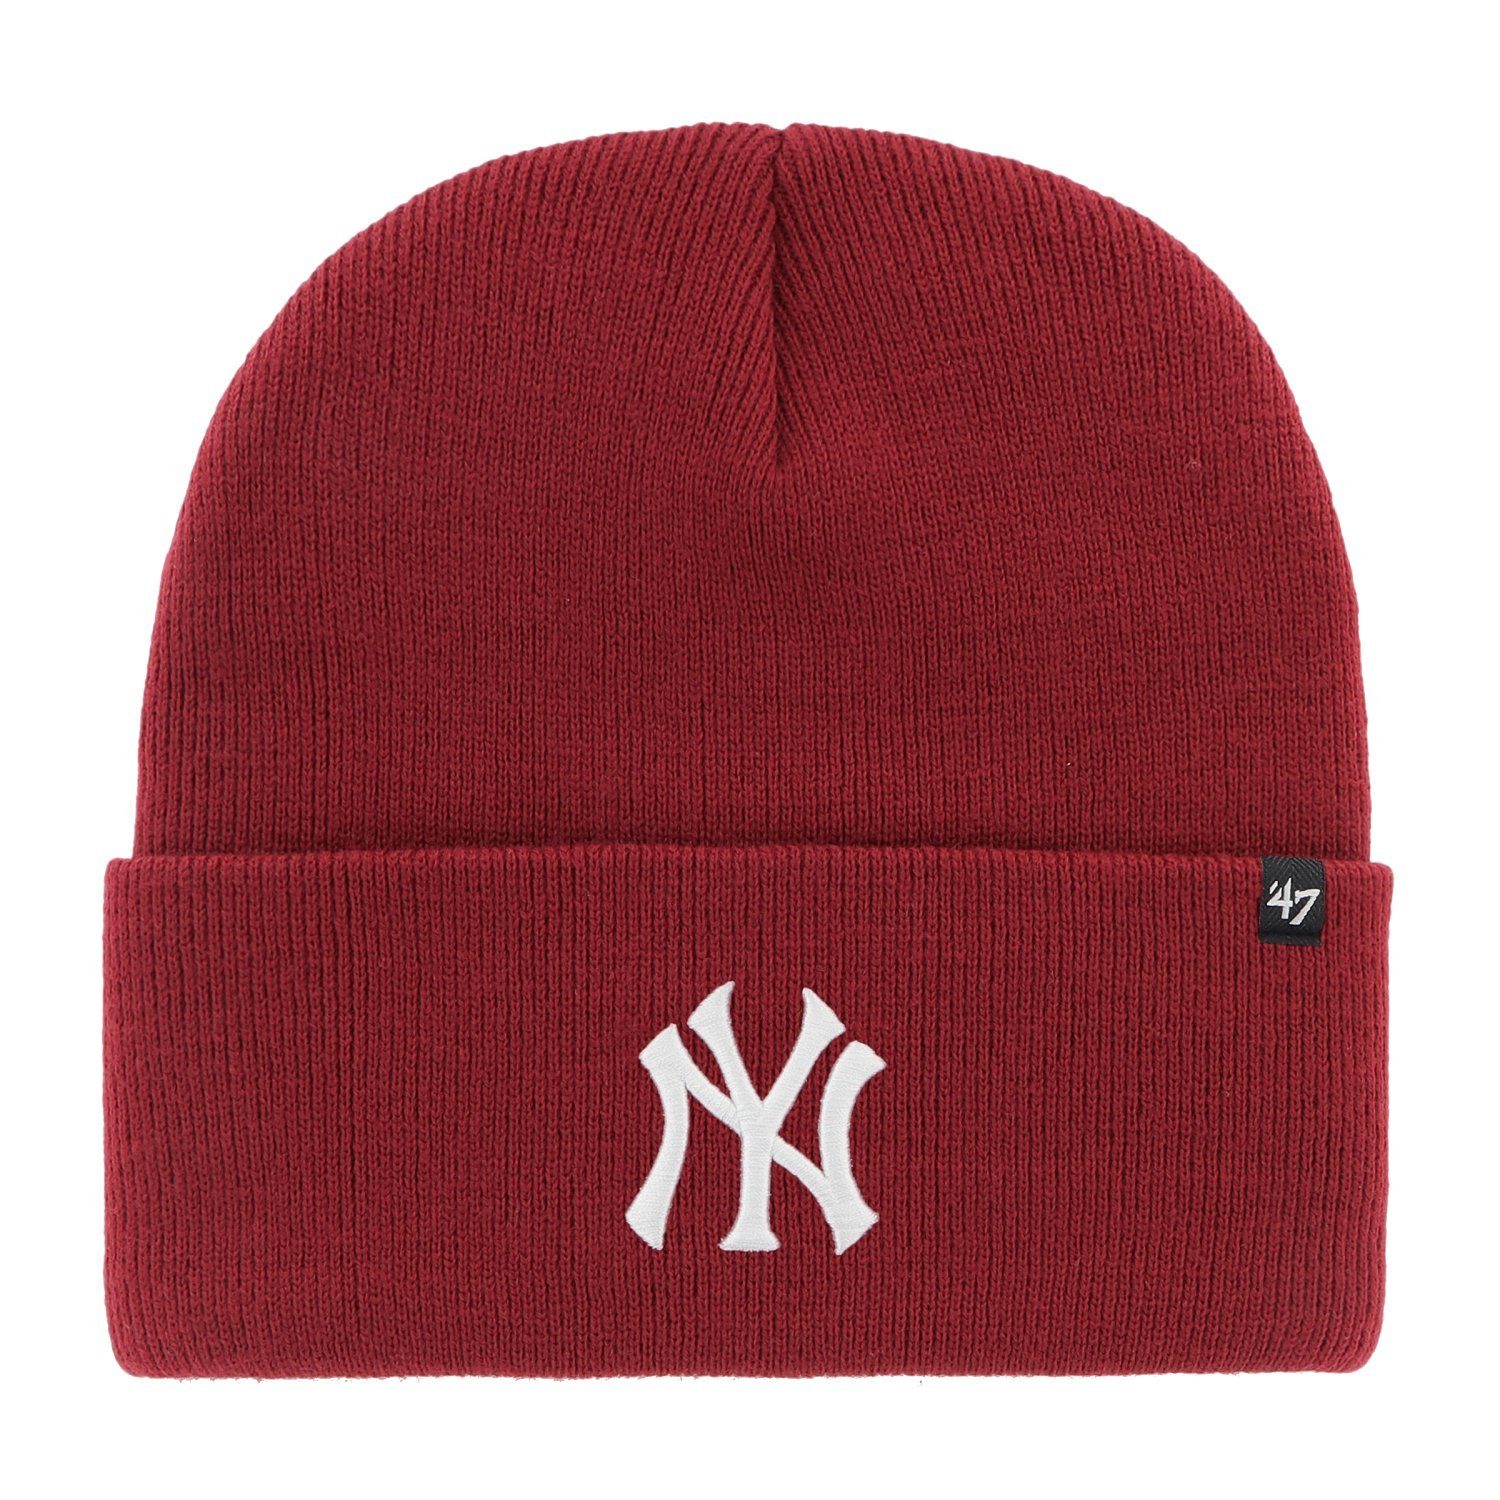 '47 Brand Fleecemütze Beanie HAYMAKER NY Yankees razor red